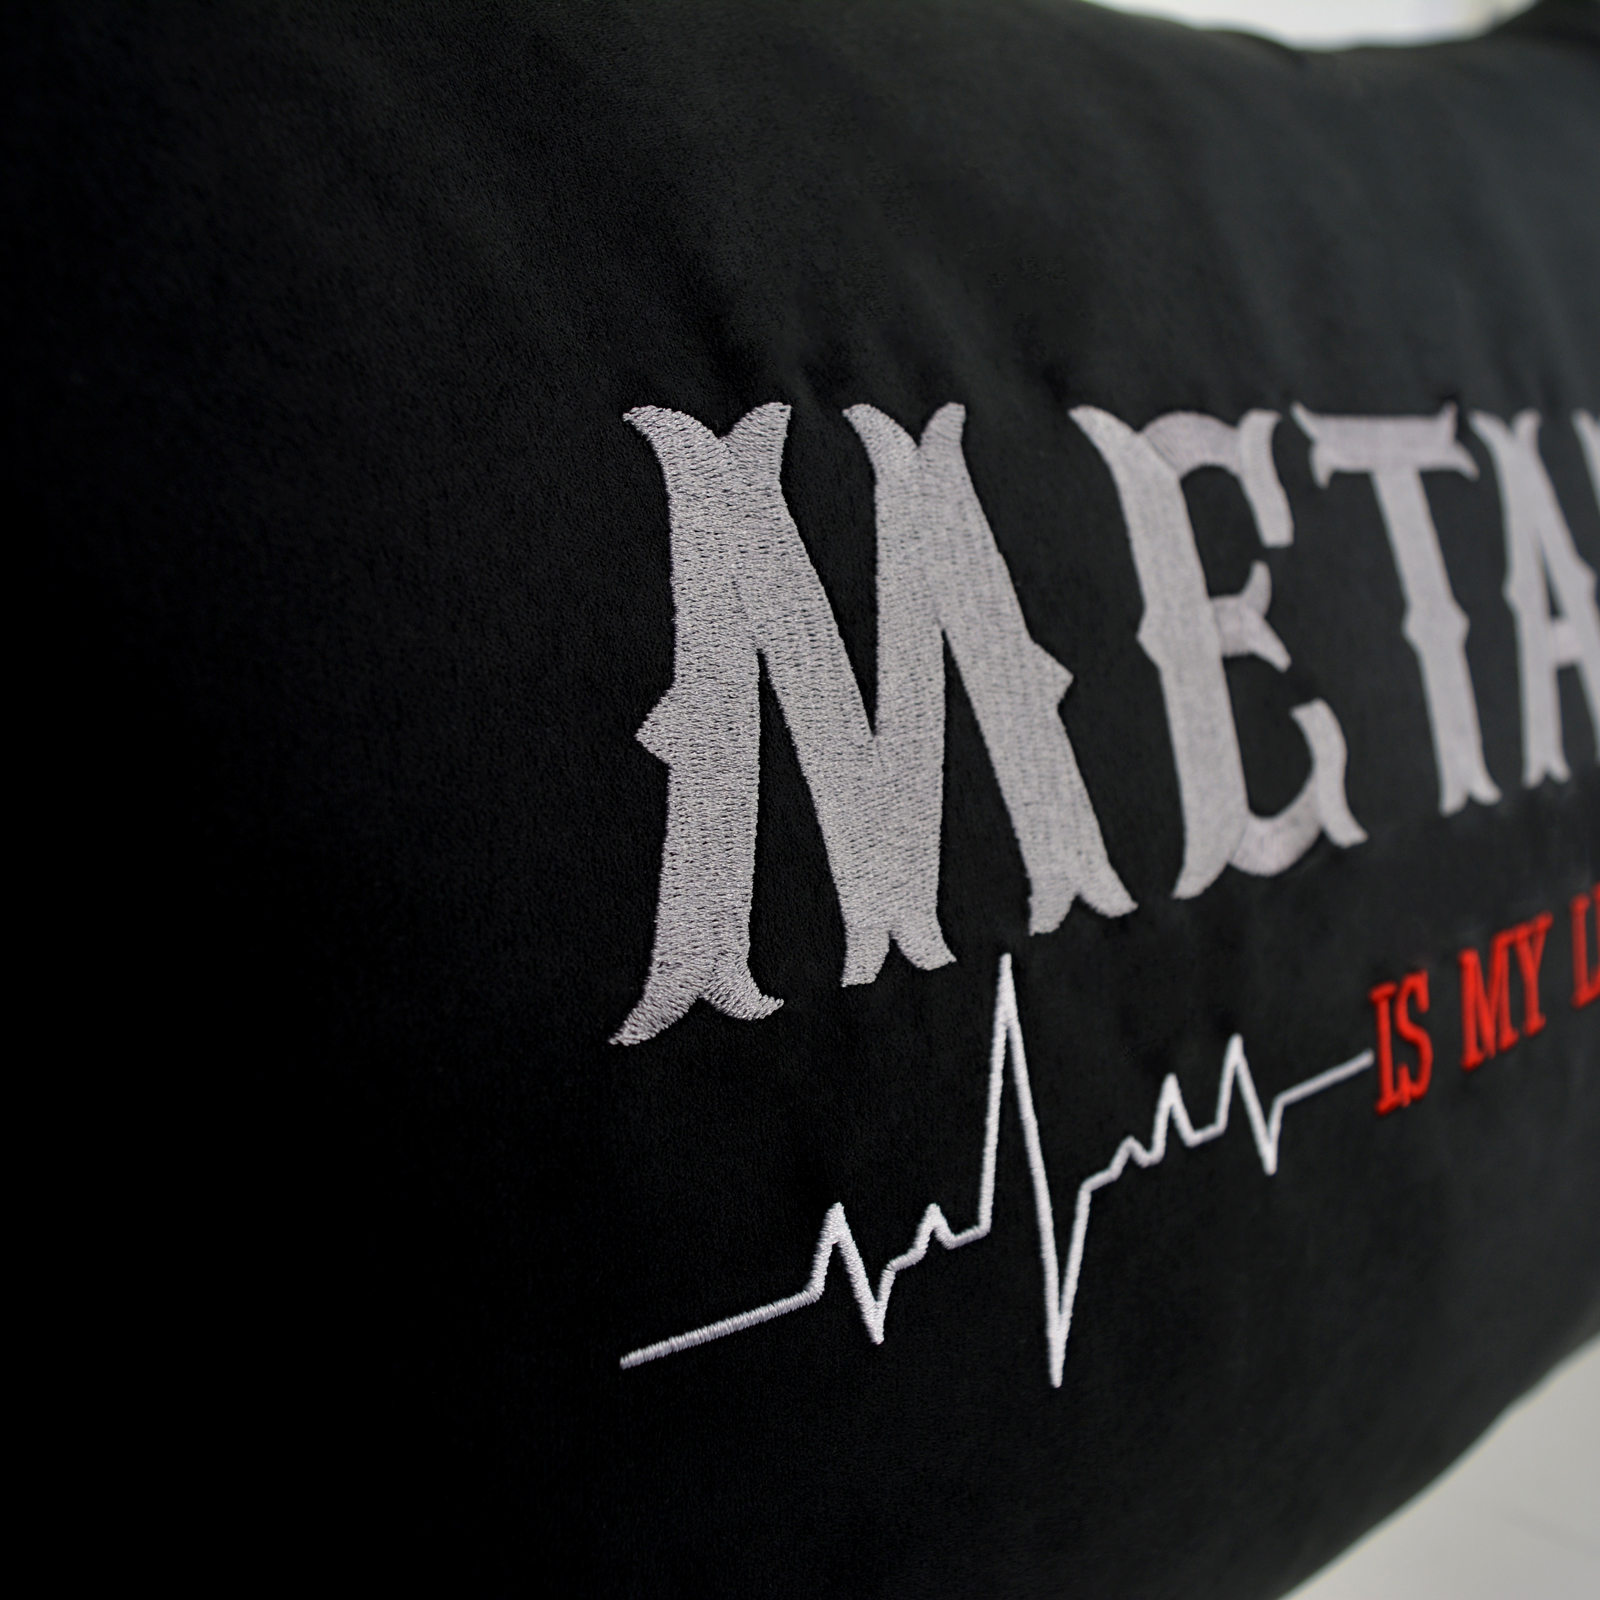 Metal is my lifeline